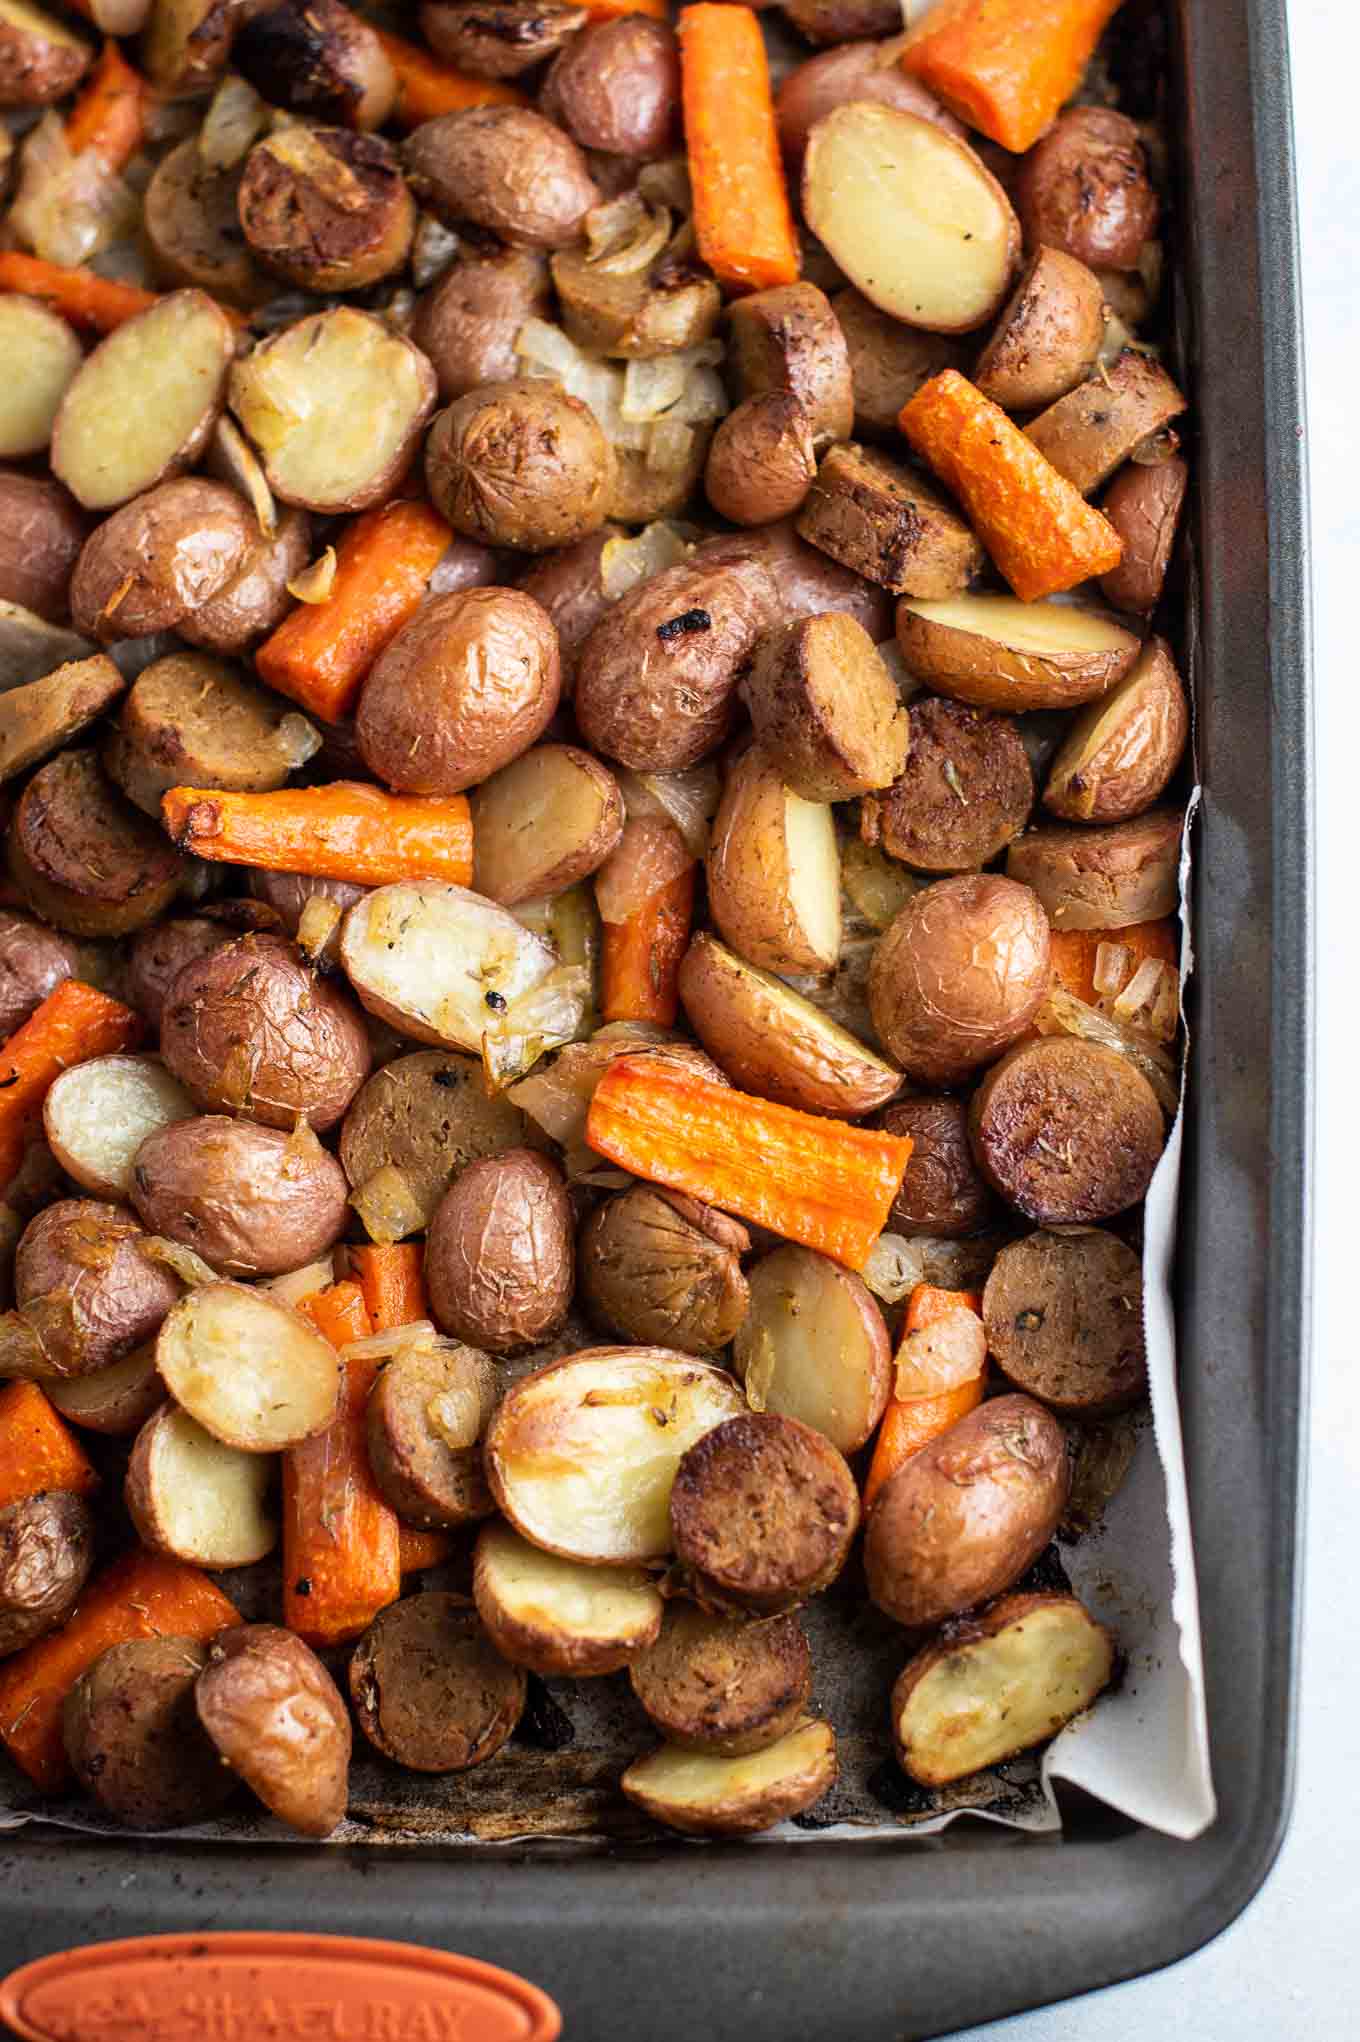 sheet pan with roasted vegetarian kielbasa, carrots, potatoes, and onions